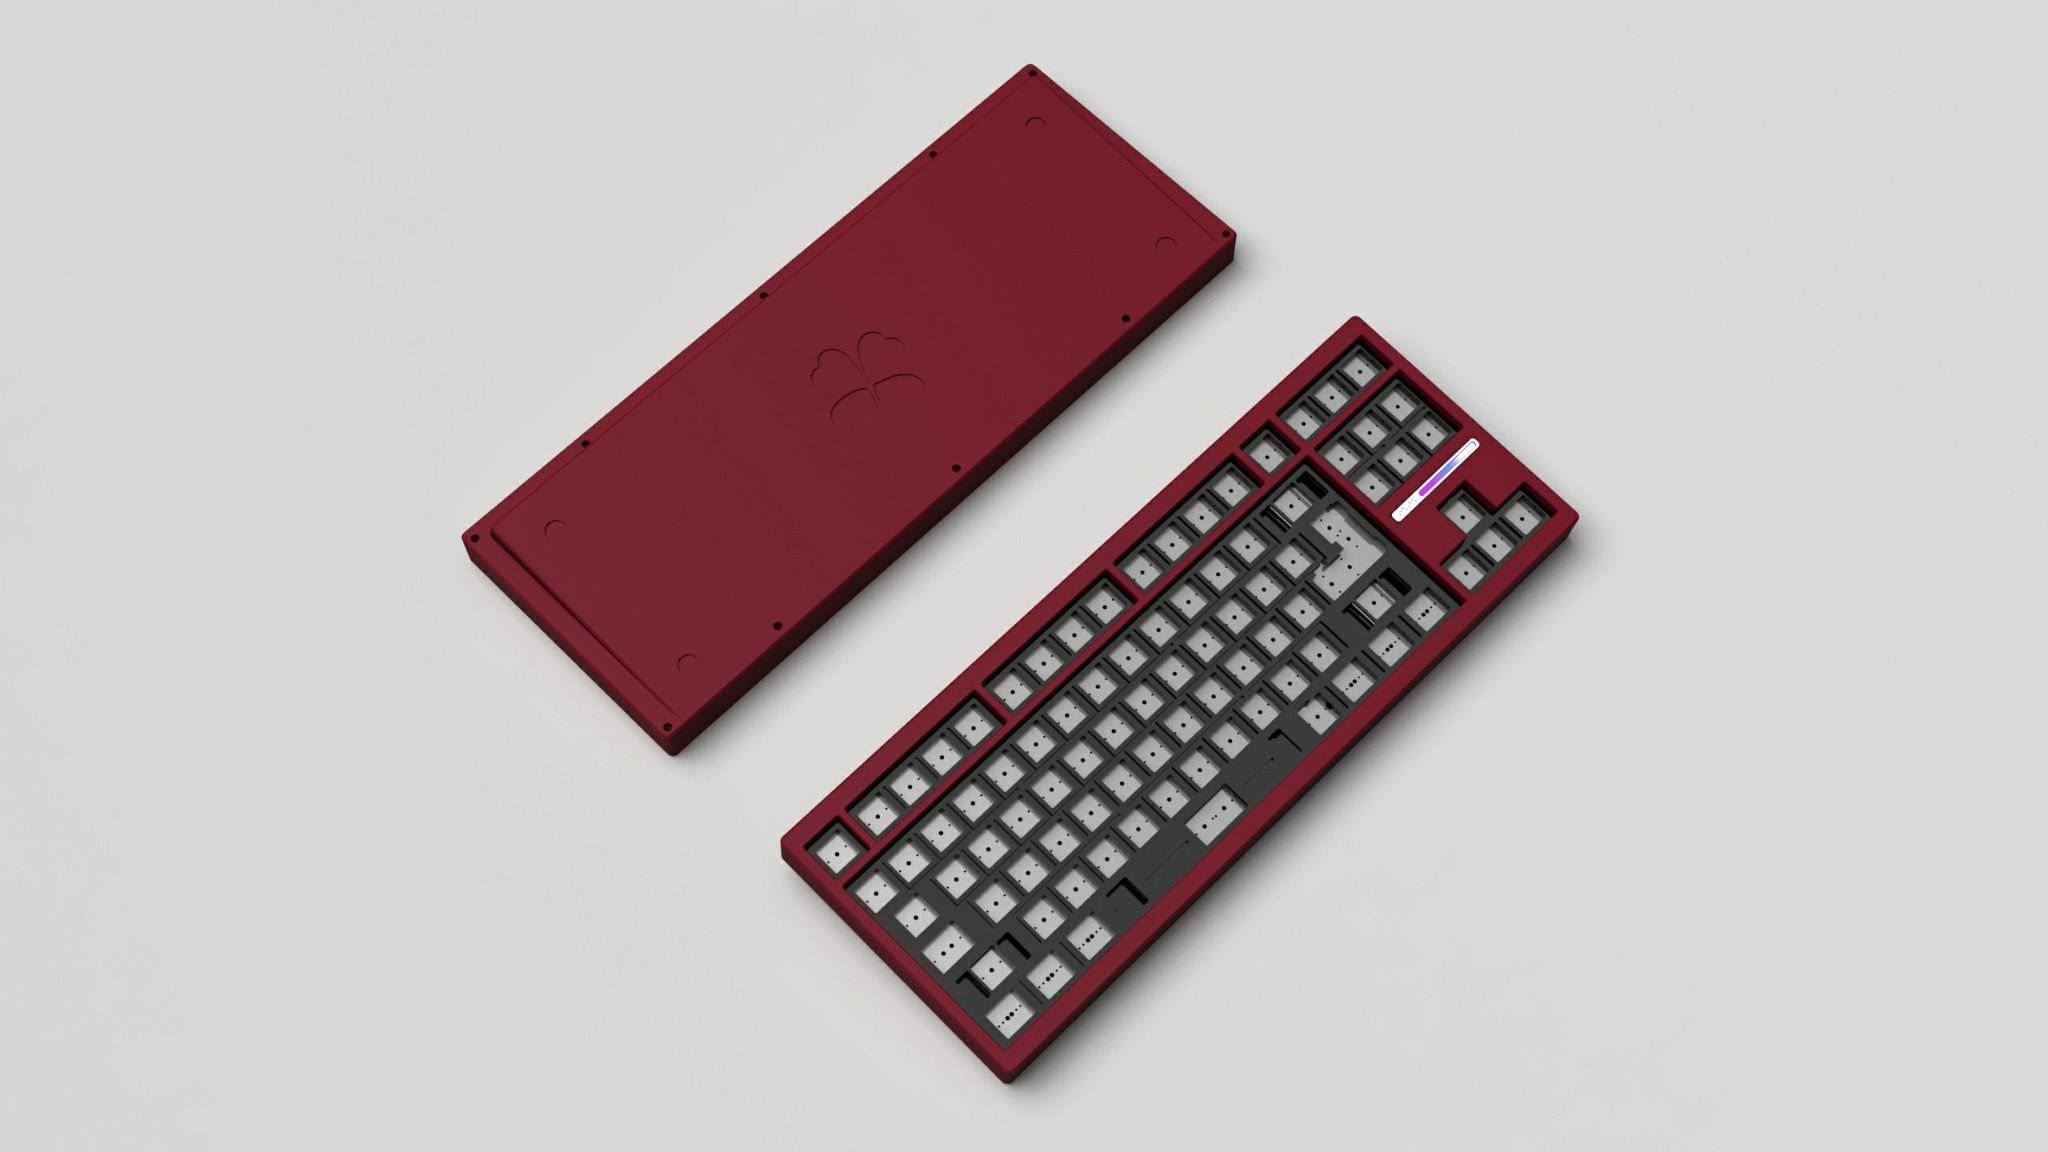  Clover80 Keyboard Kit 